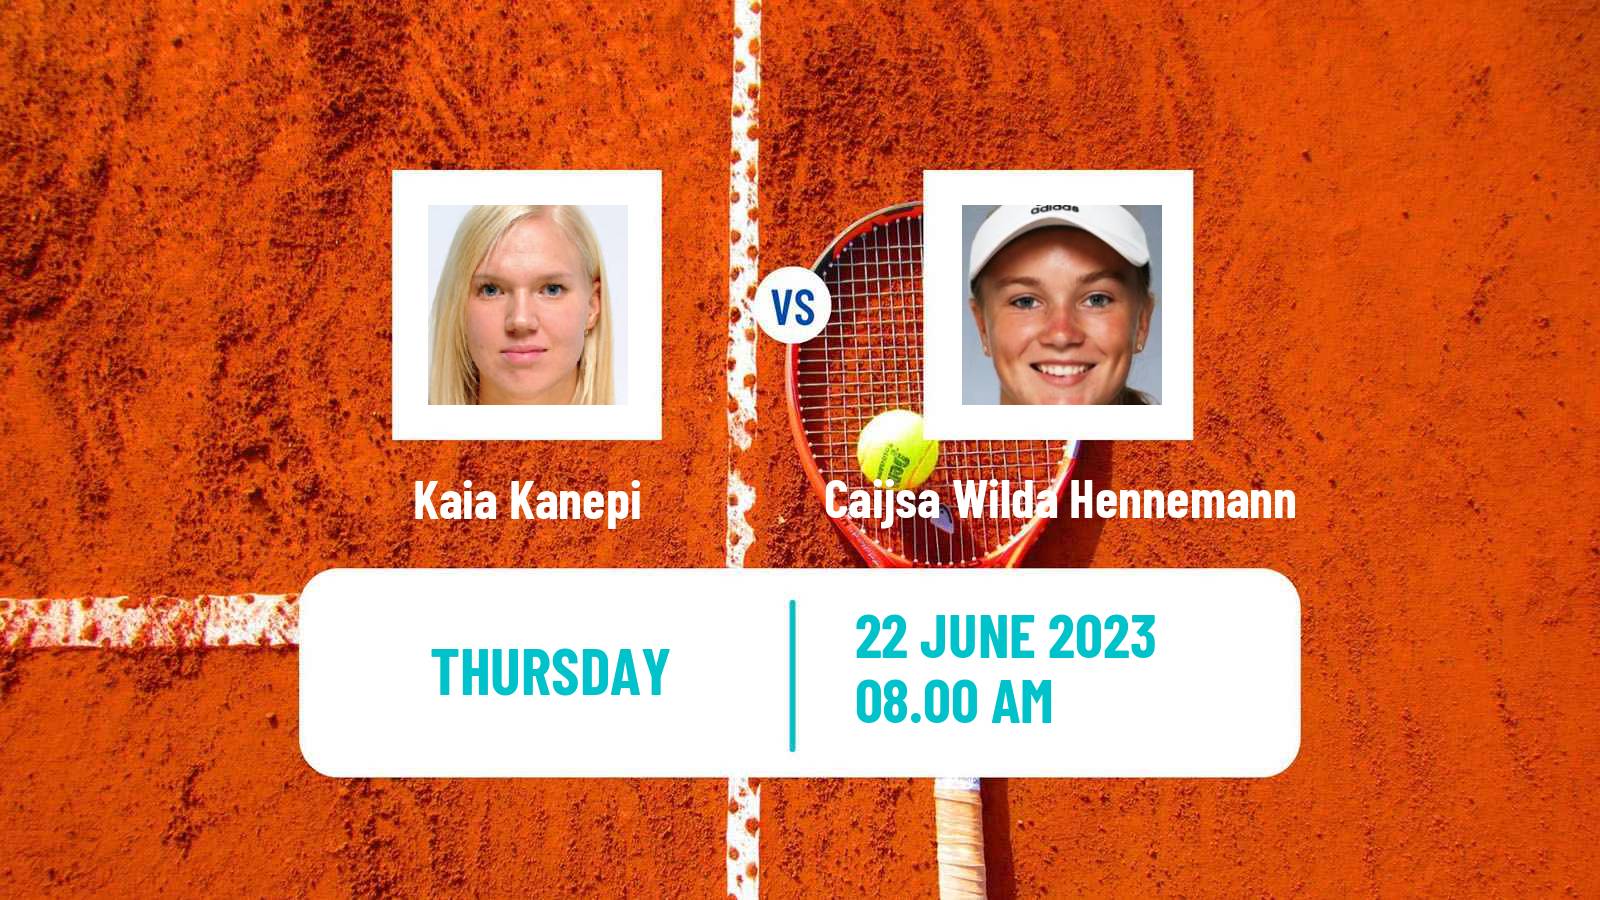 Tennis ITF W40 Ystad Women Kaia Kanepi - Caijsa Wilda Hennemann